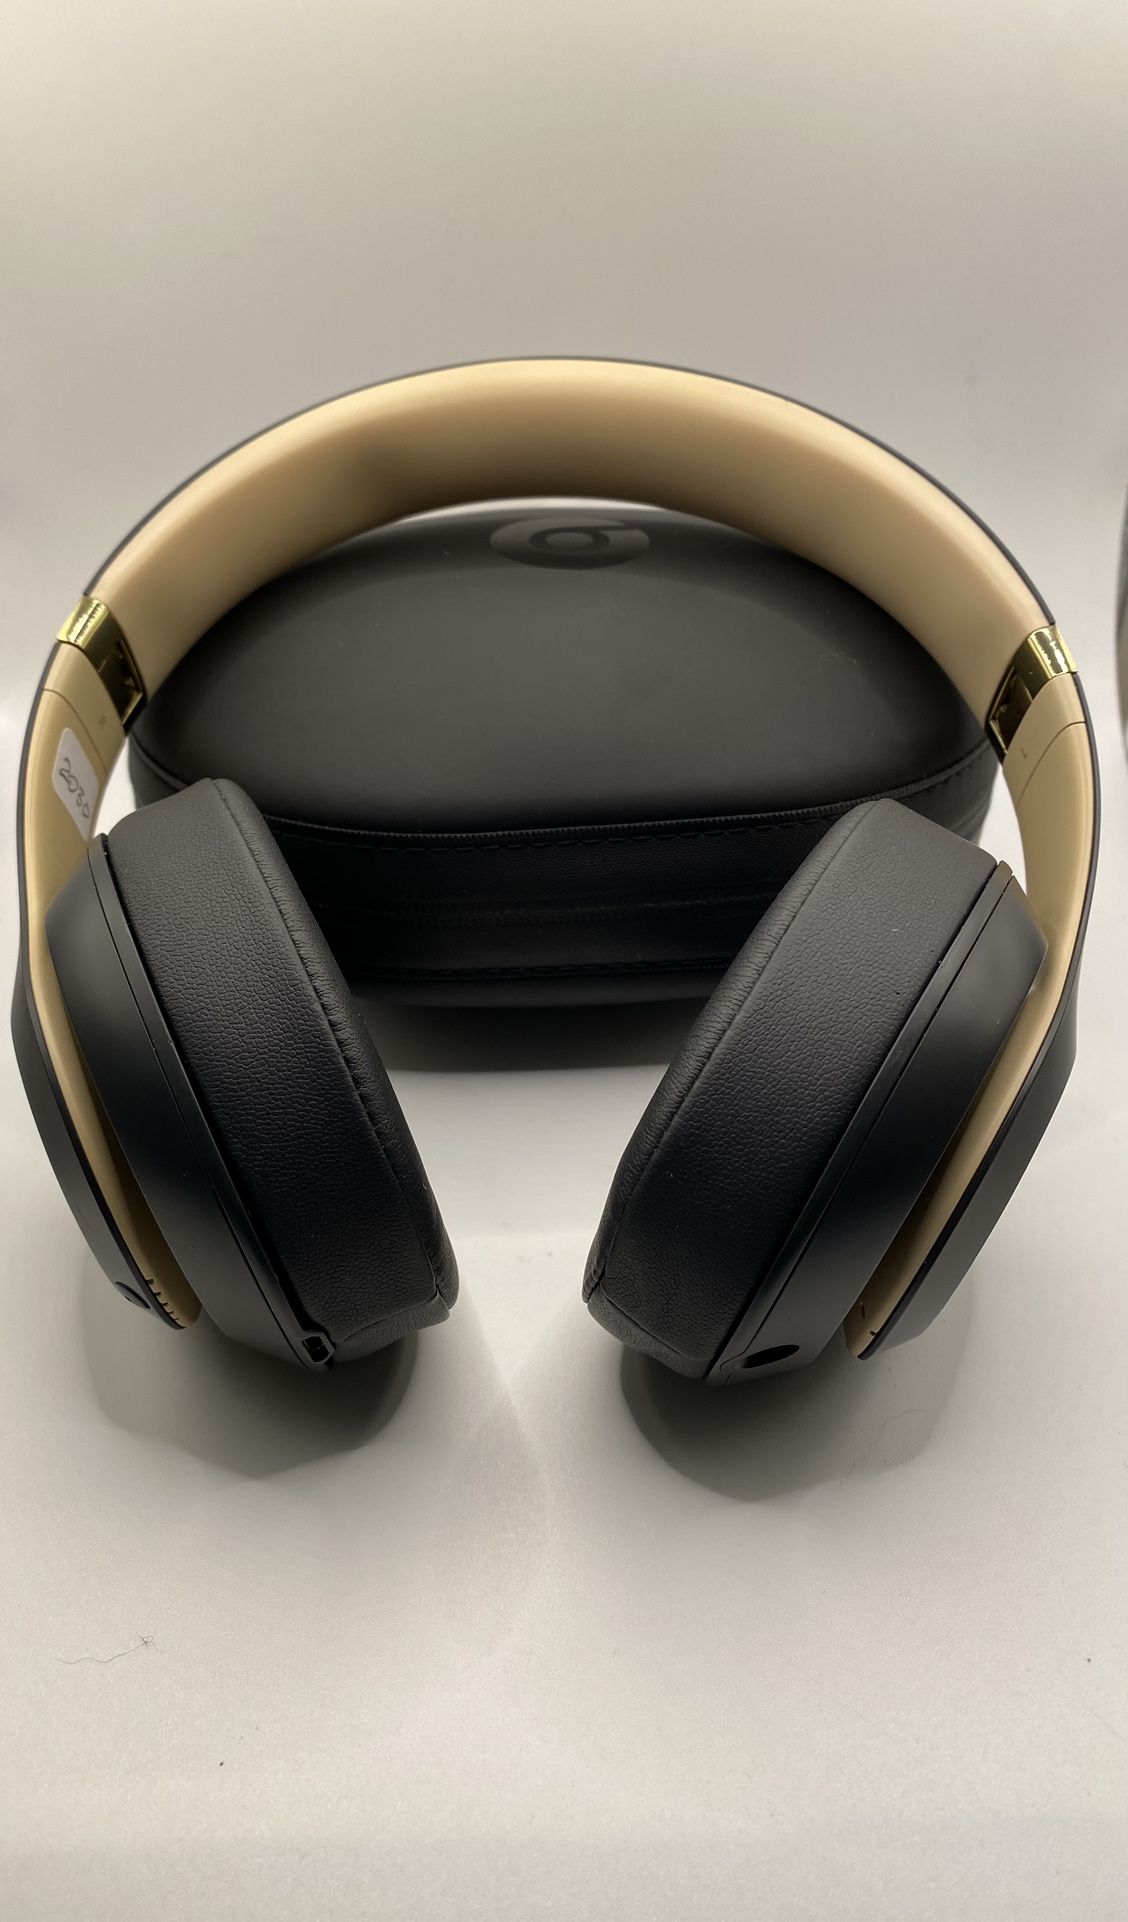 (Authentic) Shadow Gray Beats Studio3 Bluetooth Wireless Headphones with Noise Canceling #2030